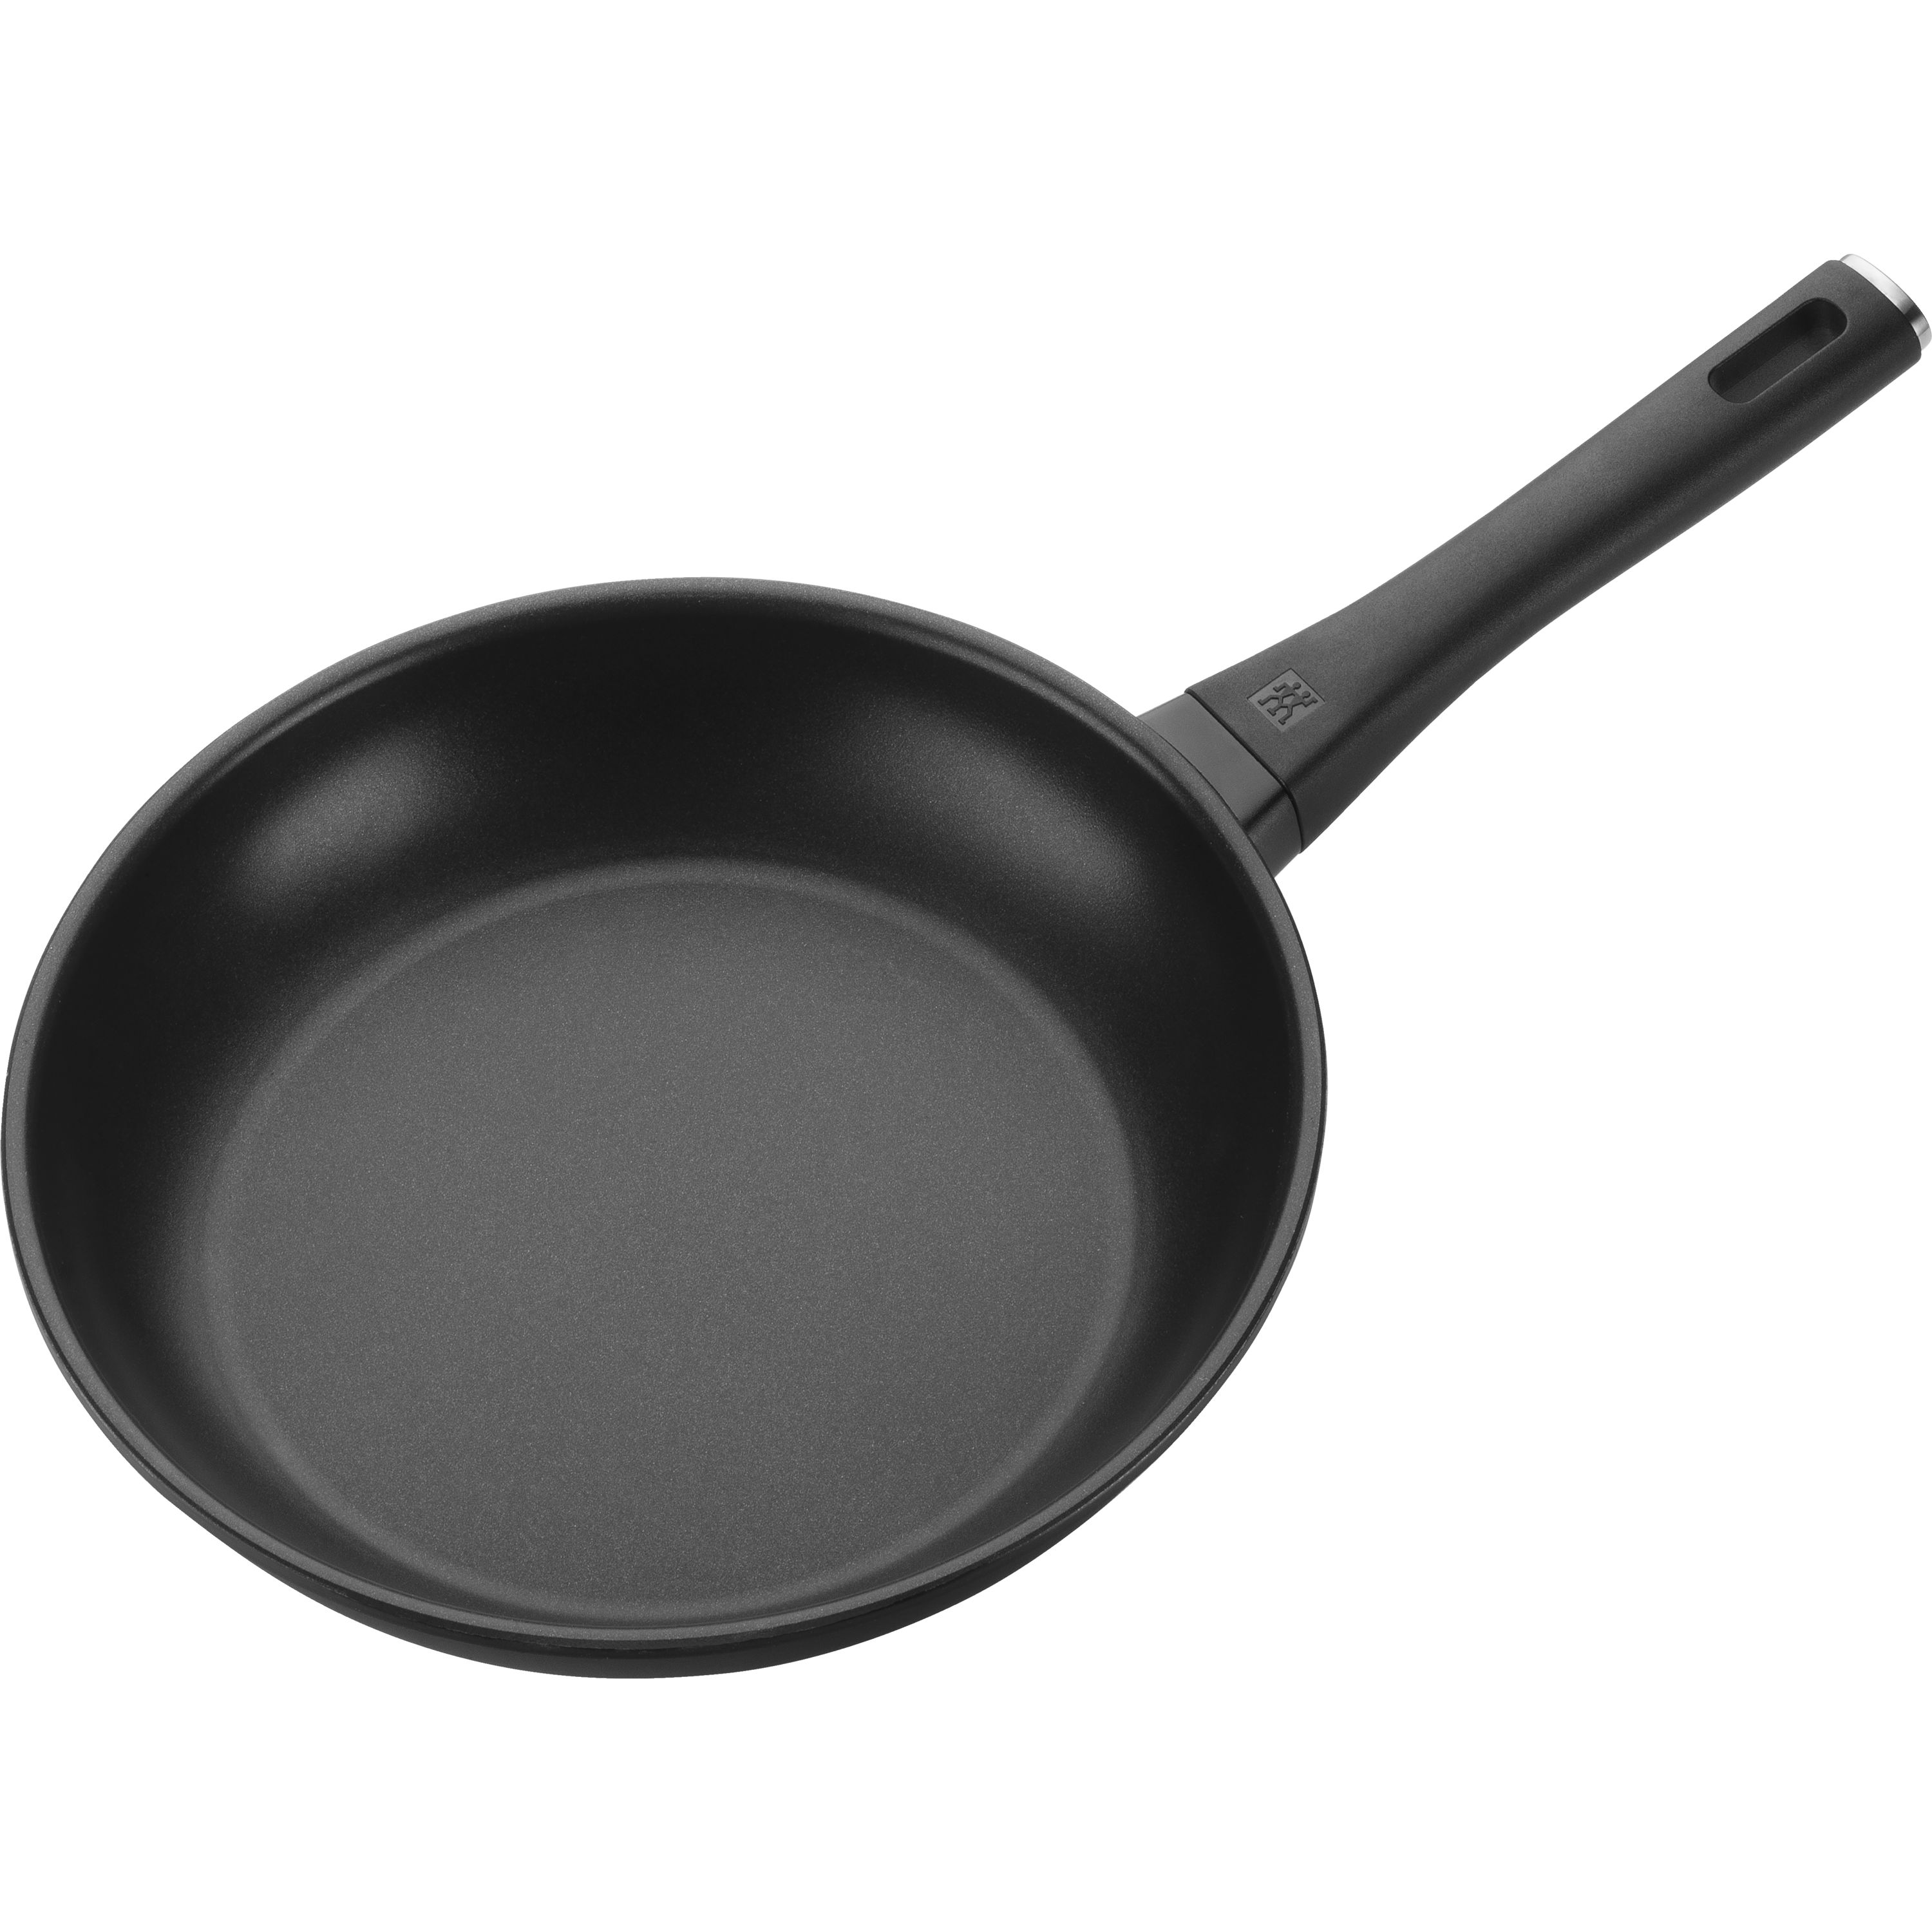 ZWILLING Madura Plus Slate 8-inch Nonstick Fry Pan, 8-inch